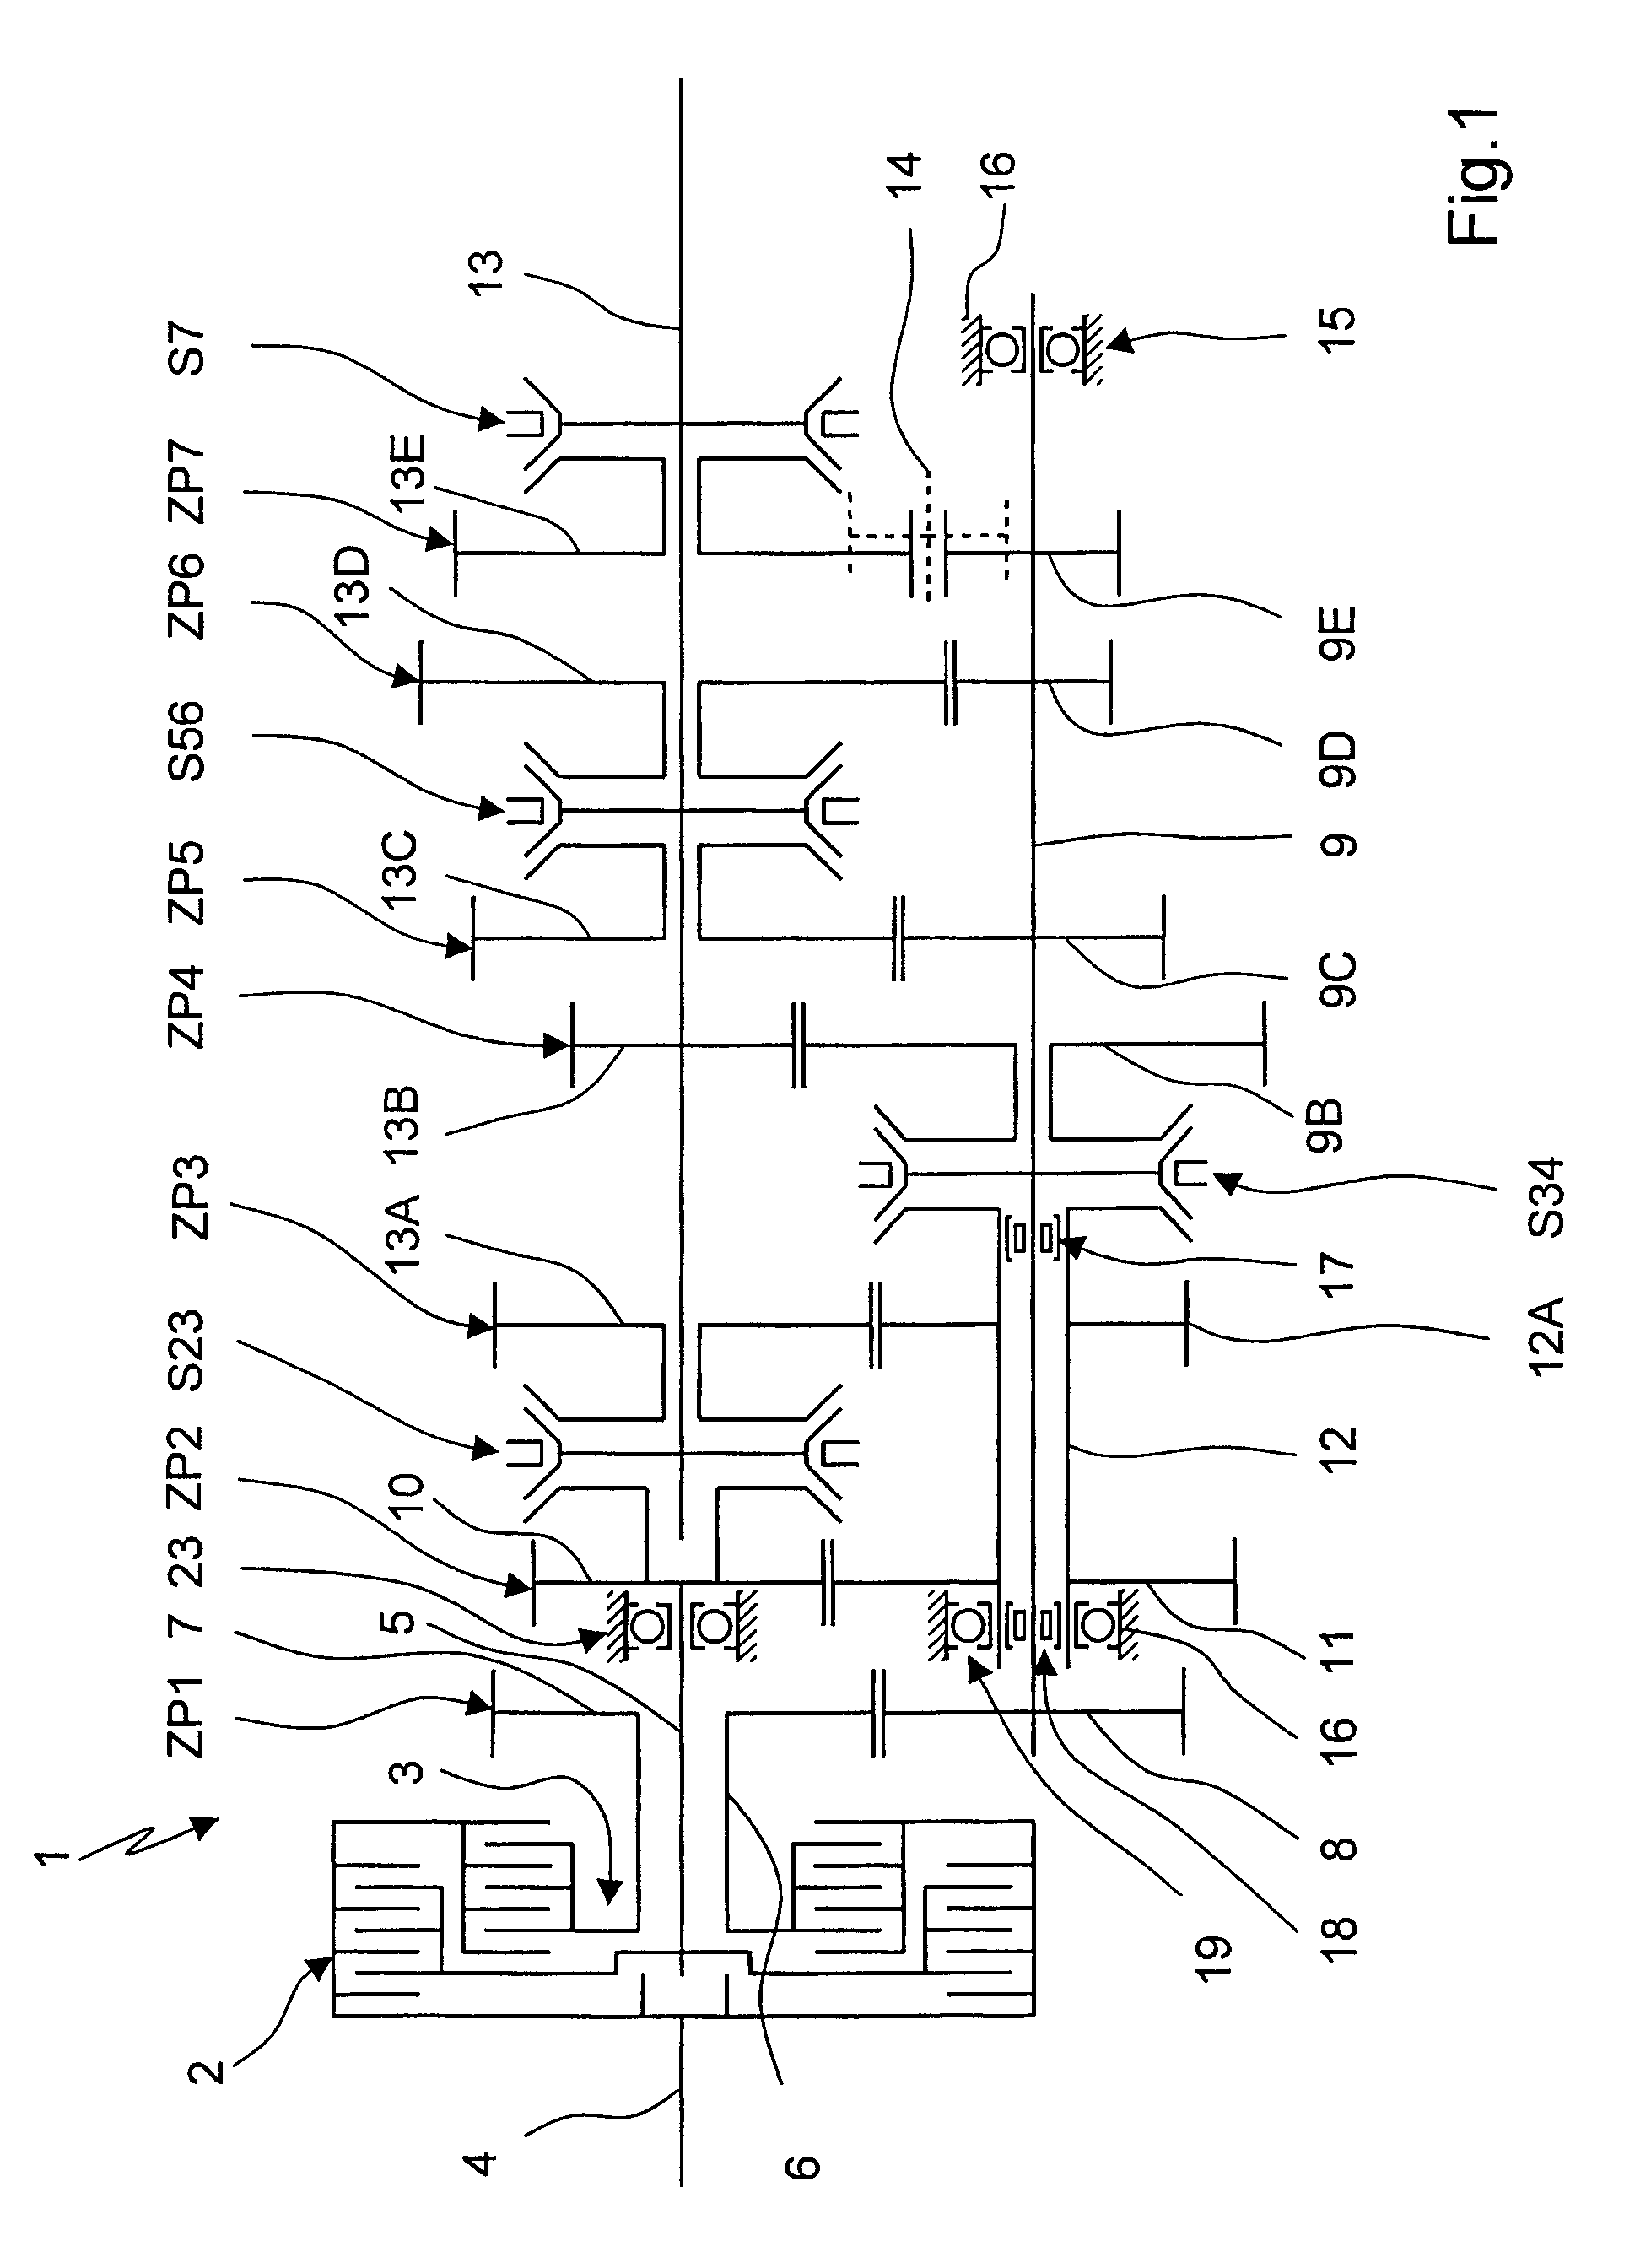 Multistep transmission of a layshaft type